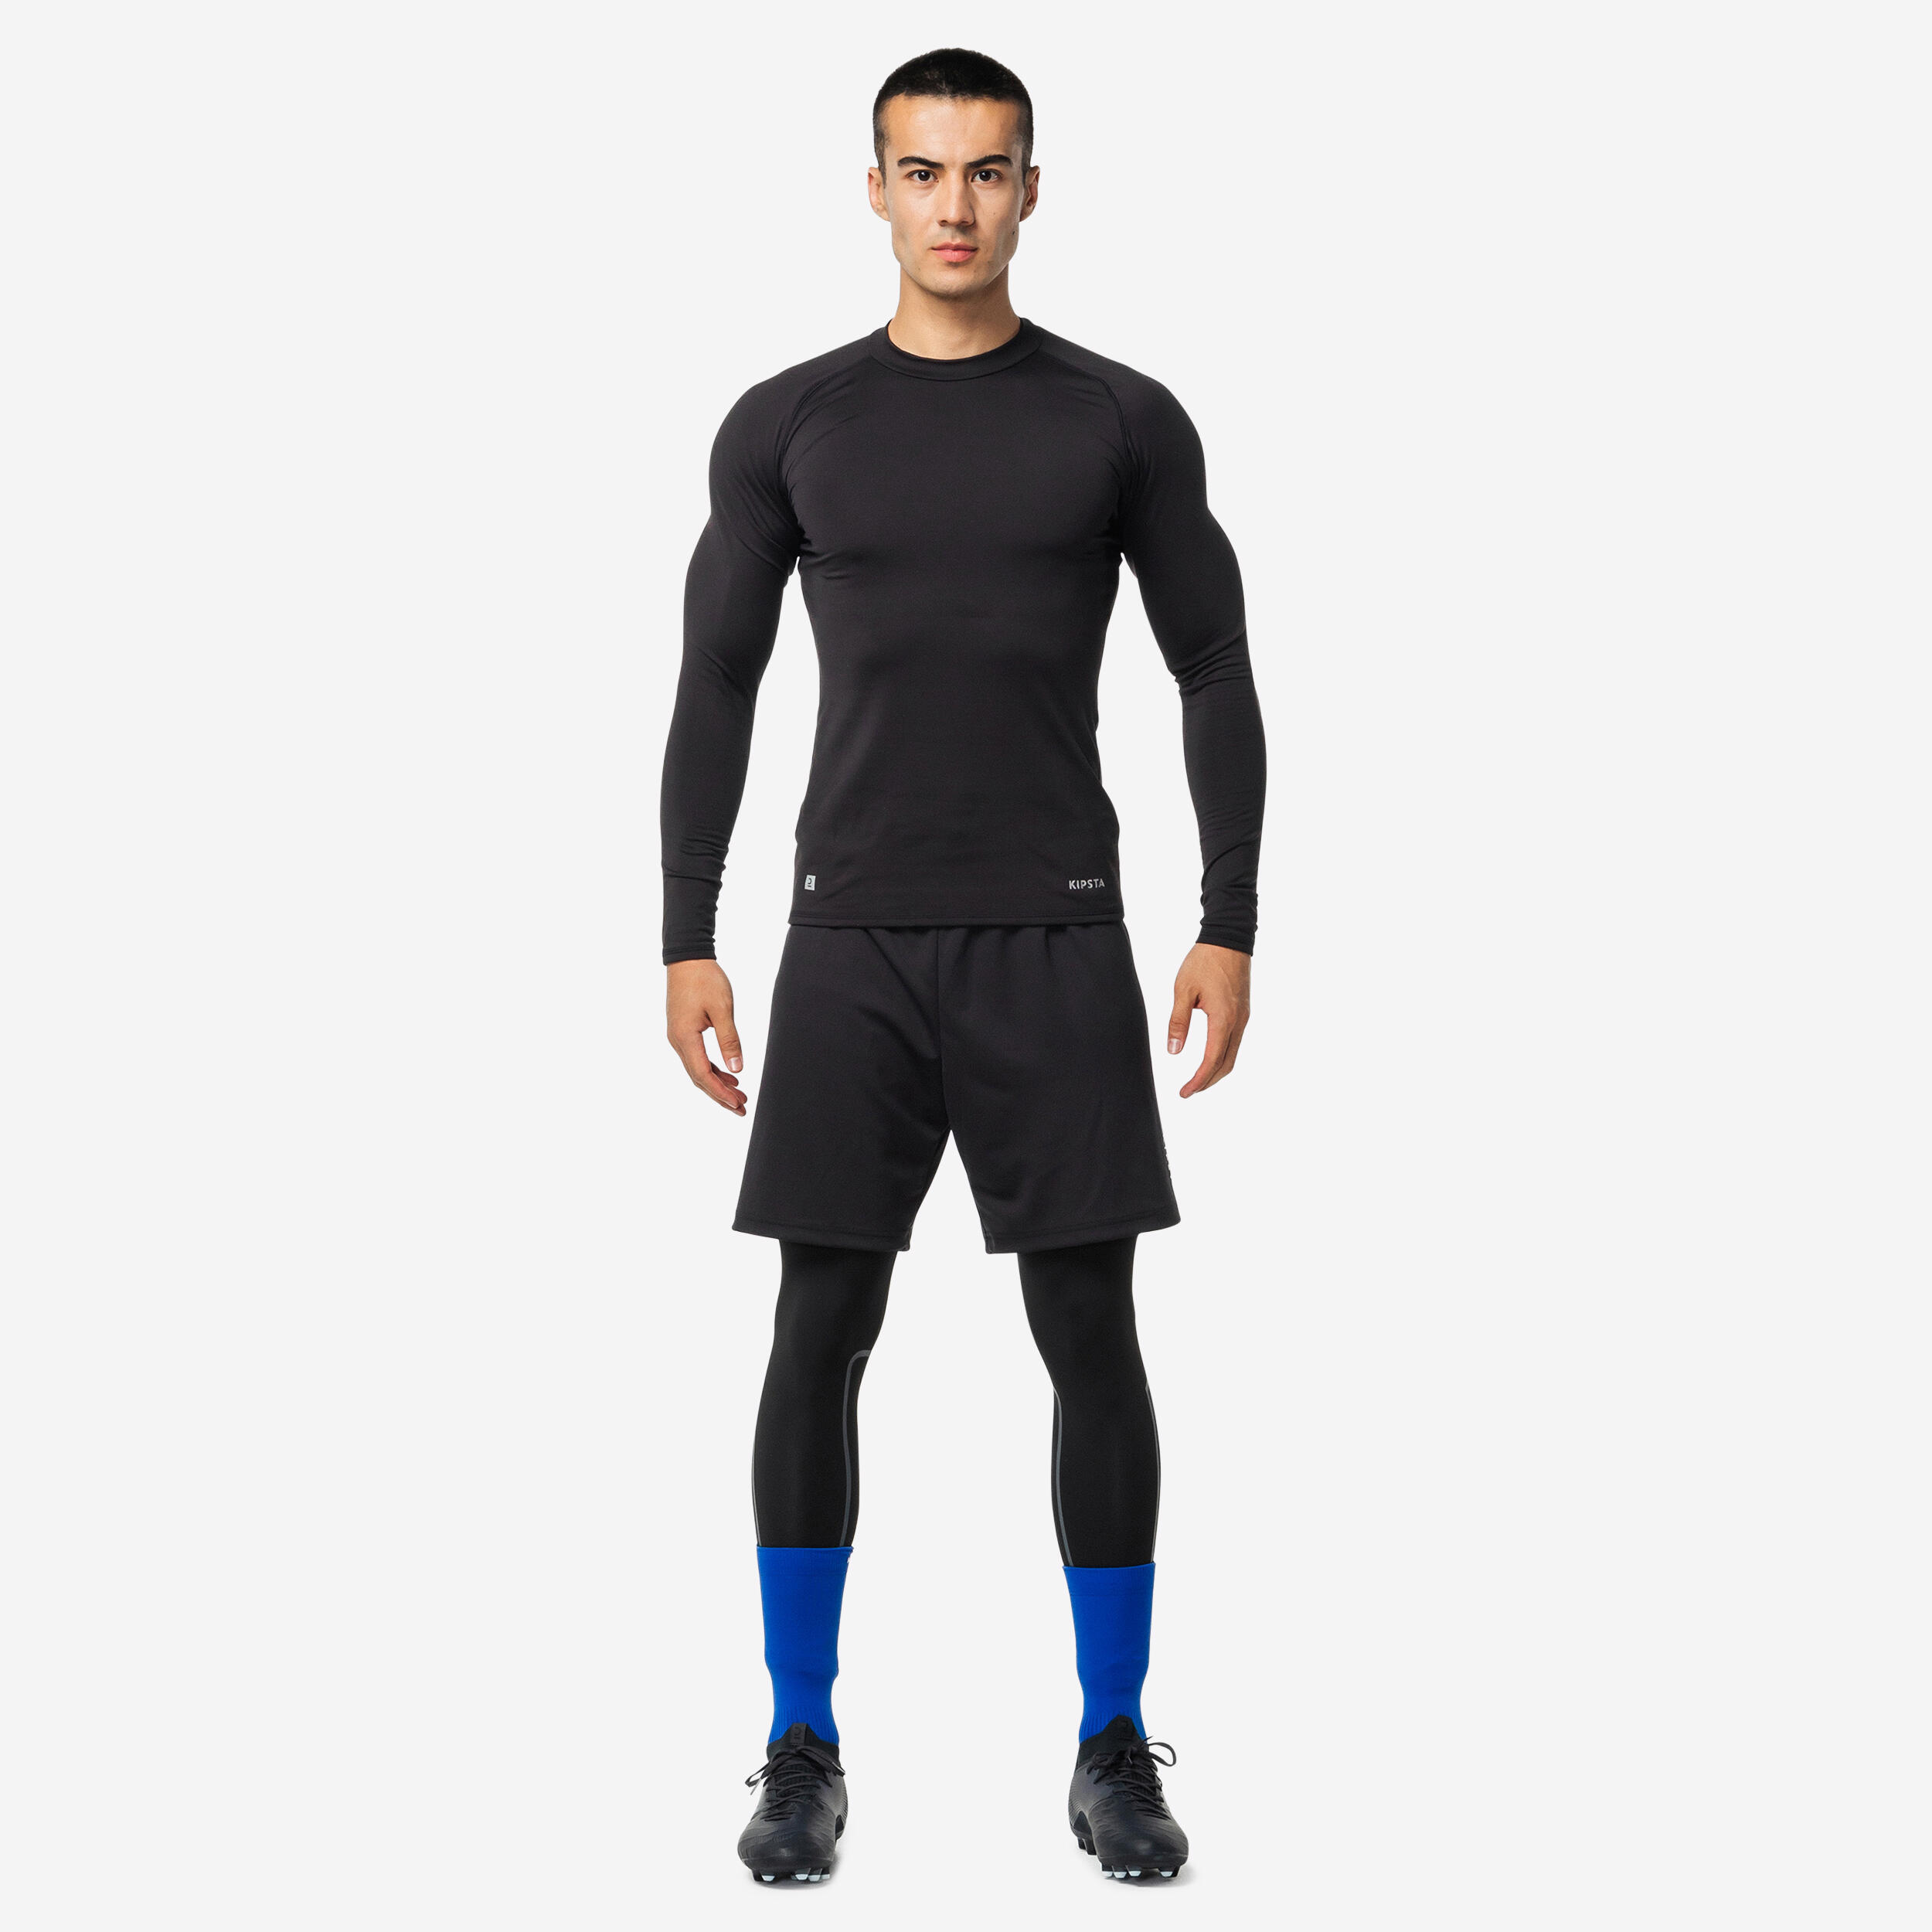 KIPSTA Adult Long-Sleeved Thermal Football Base Layer Top Keepcomfort 100 - Black